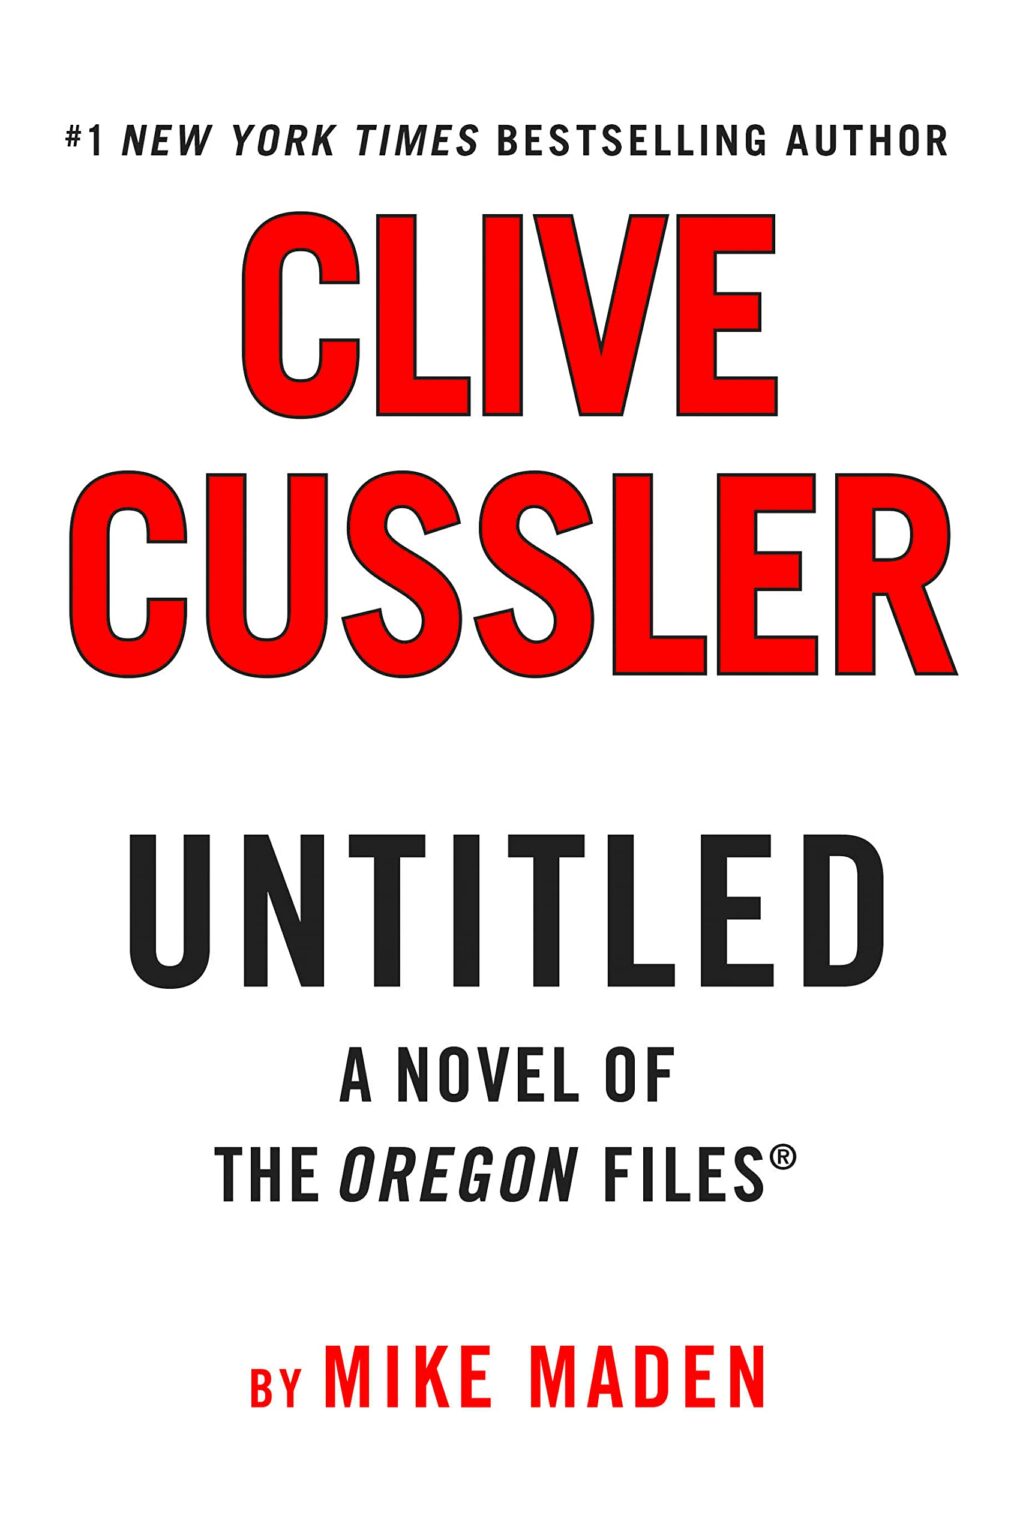 Clive Cussler 2023 Releases Clive Cussler Next Book 2023/2024